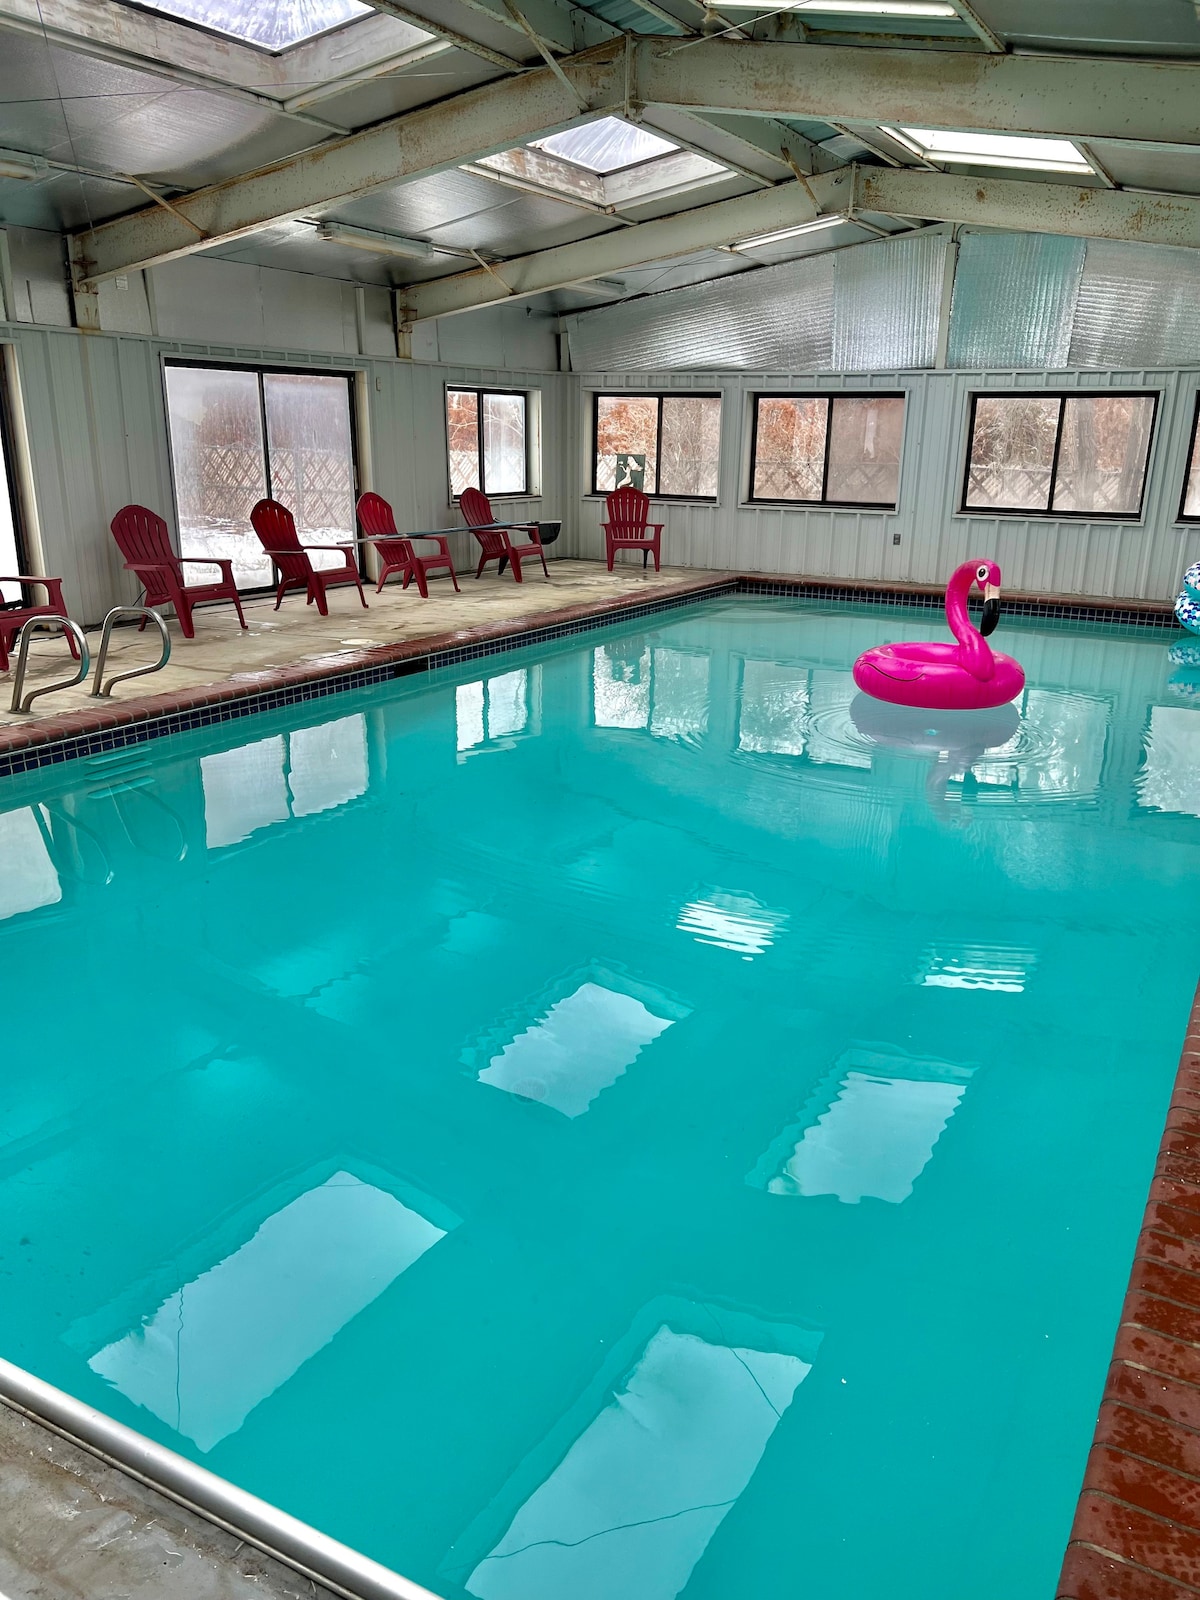 Charming house! Indoor pool! Swim today! 80°!